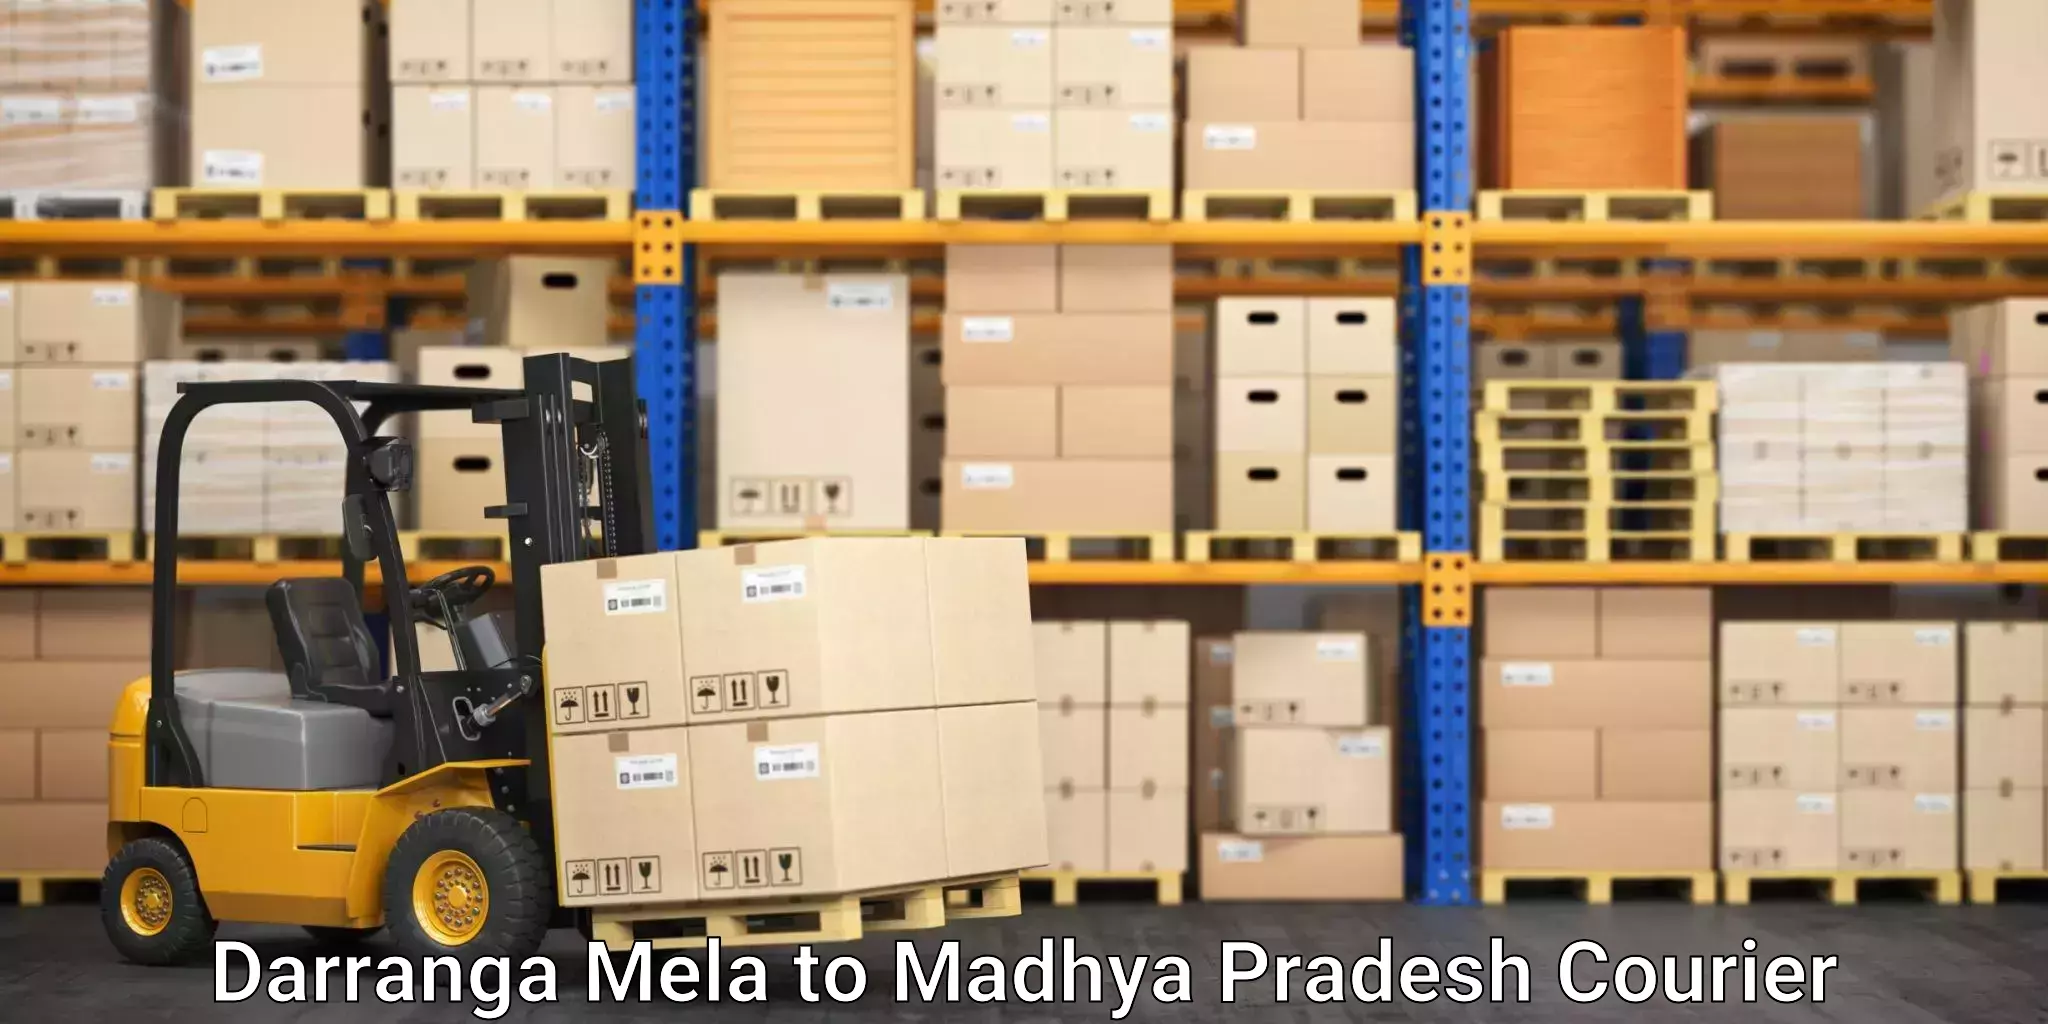 Cargo delivery service in Darranga Mela to Madhya Pradesh